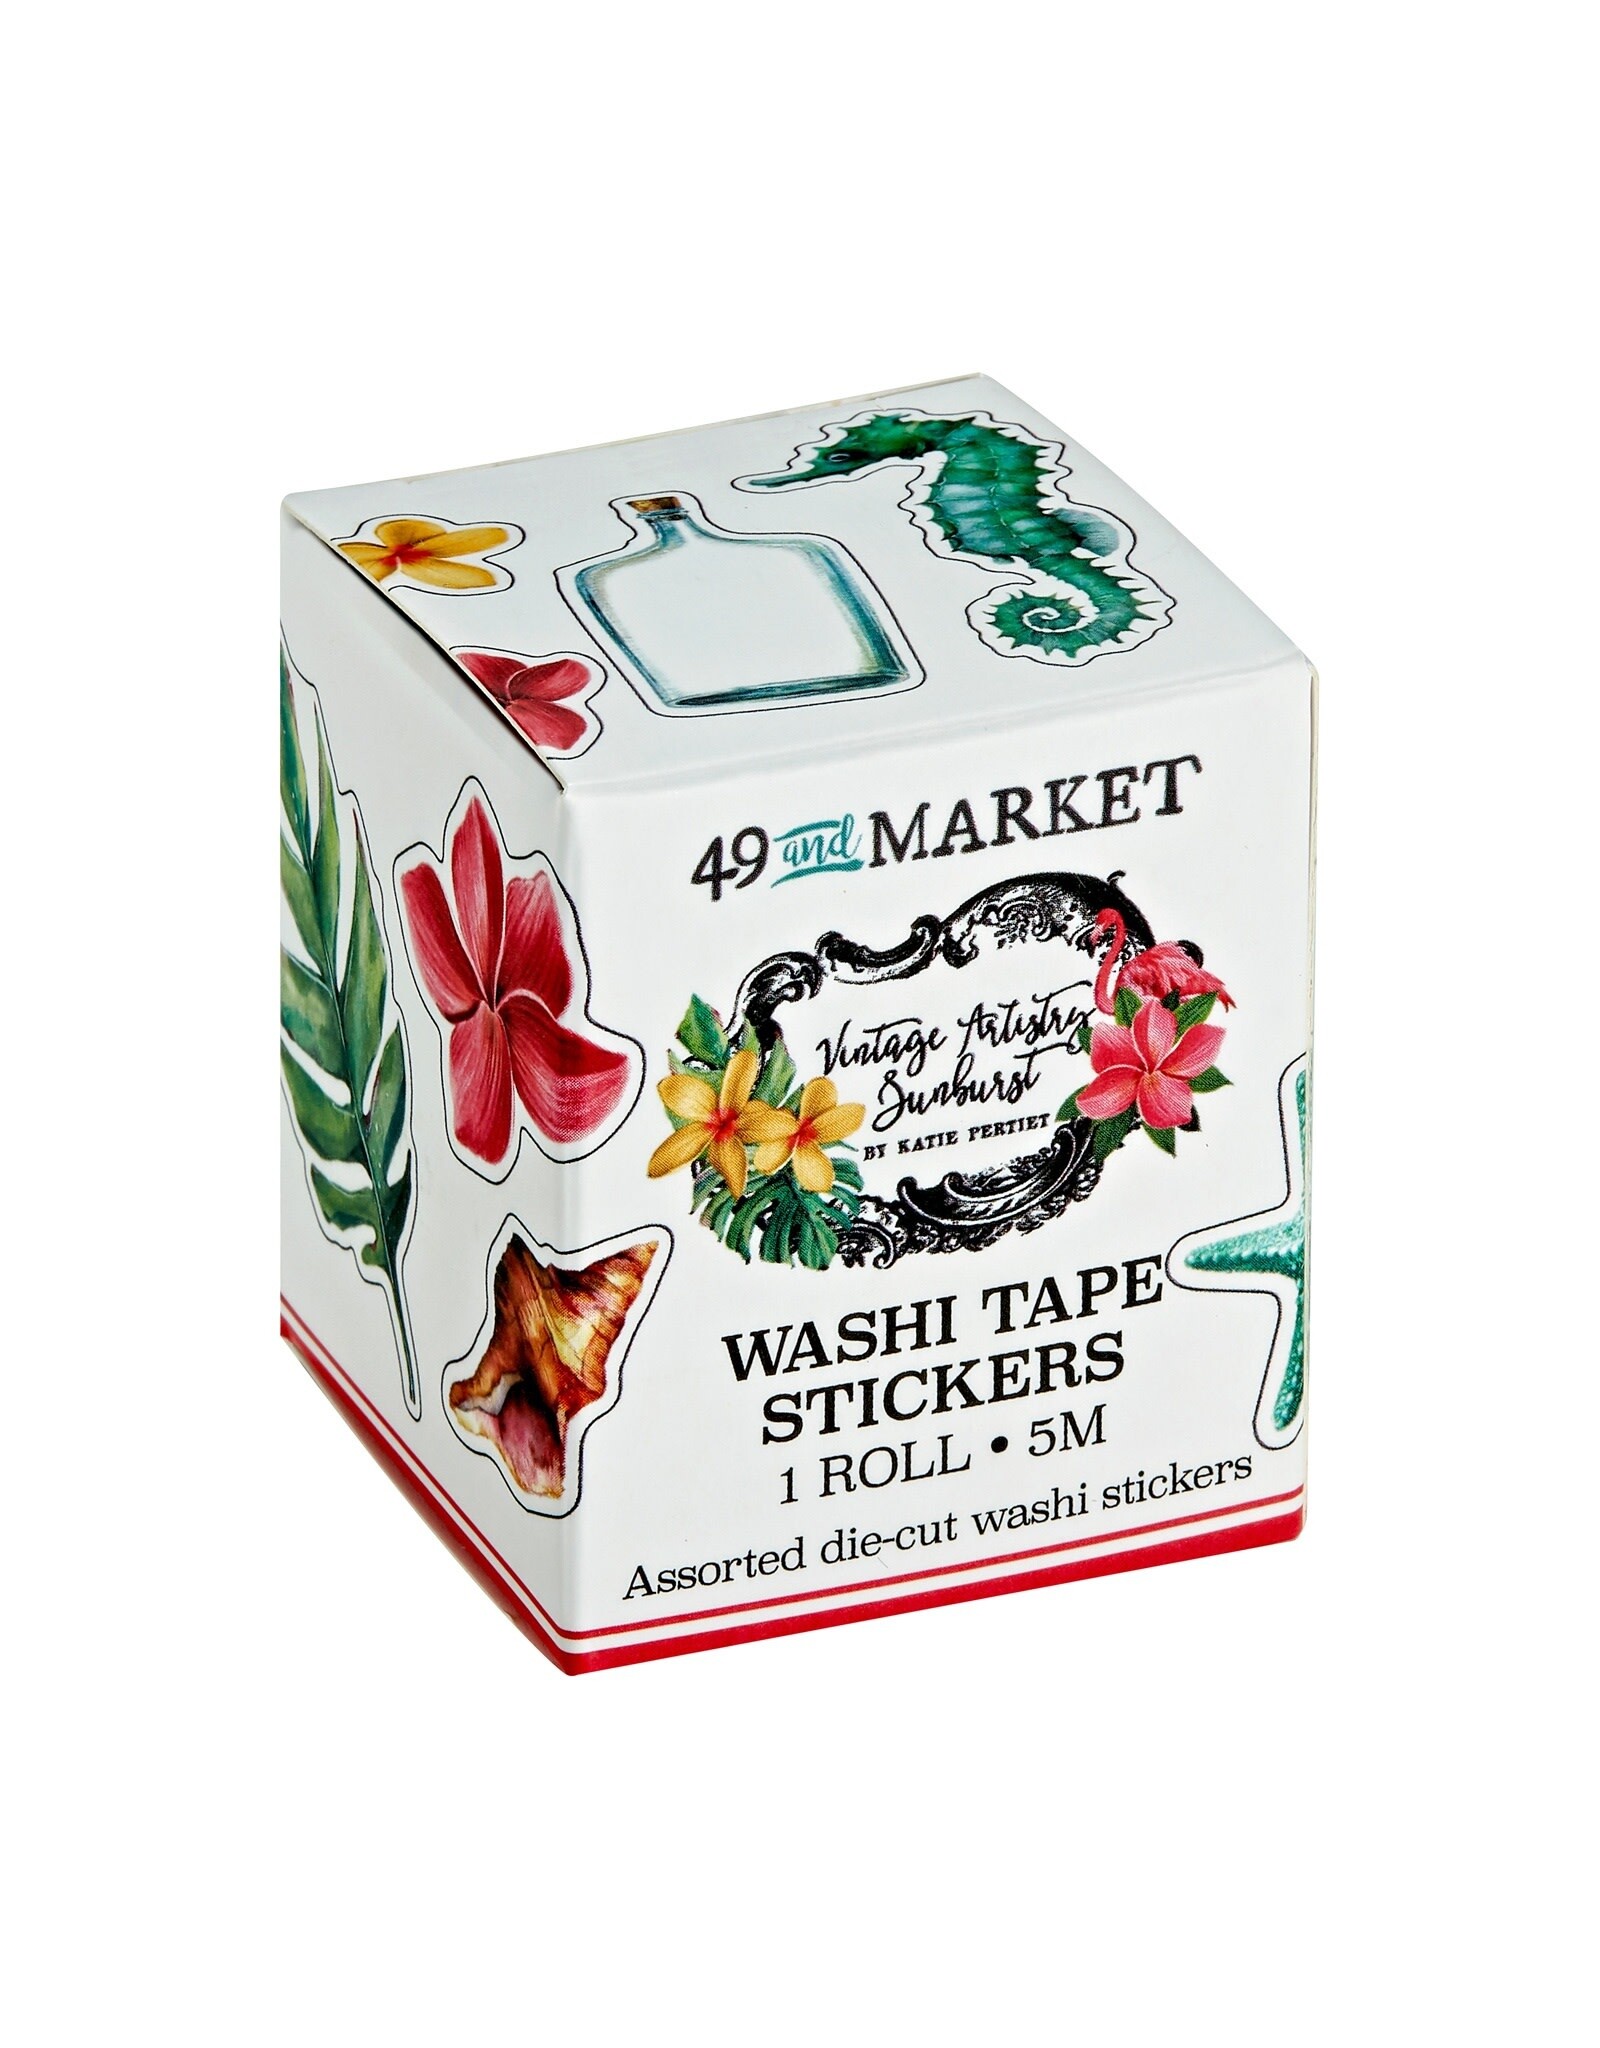 49 AND MARKET Vintage Artistry Sunburst -Washi Tape Stickers